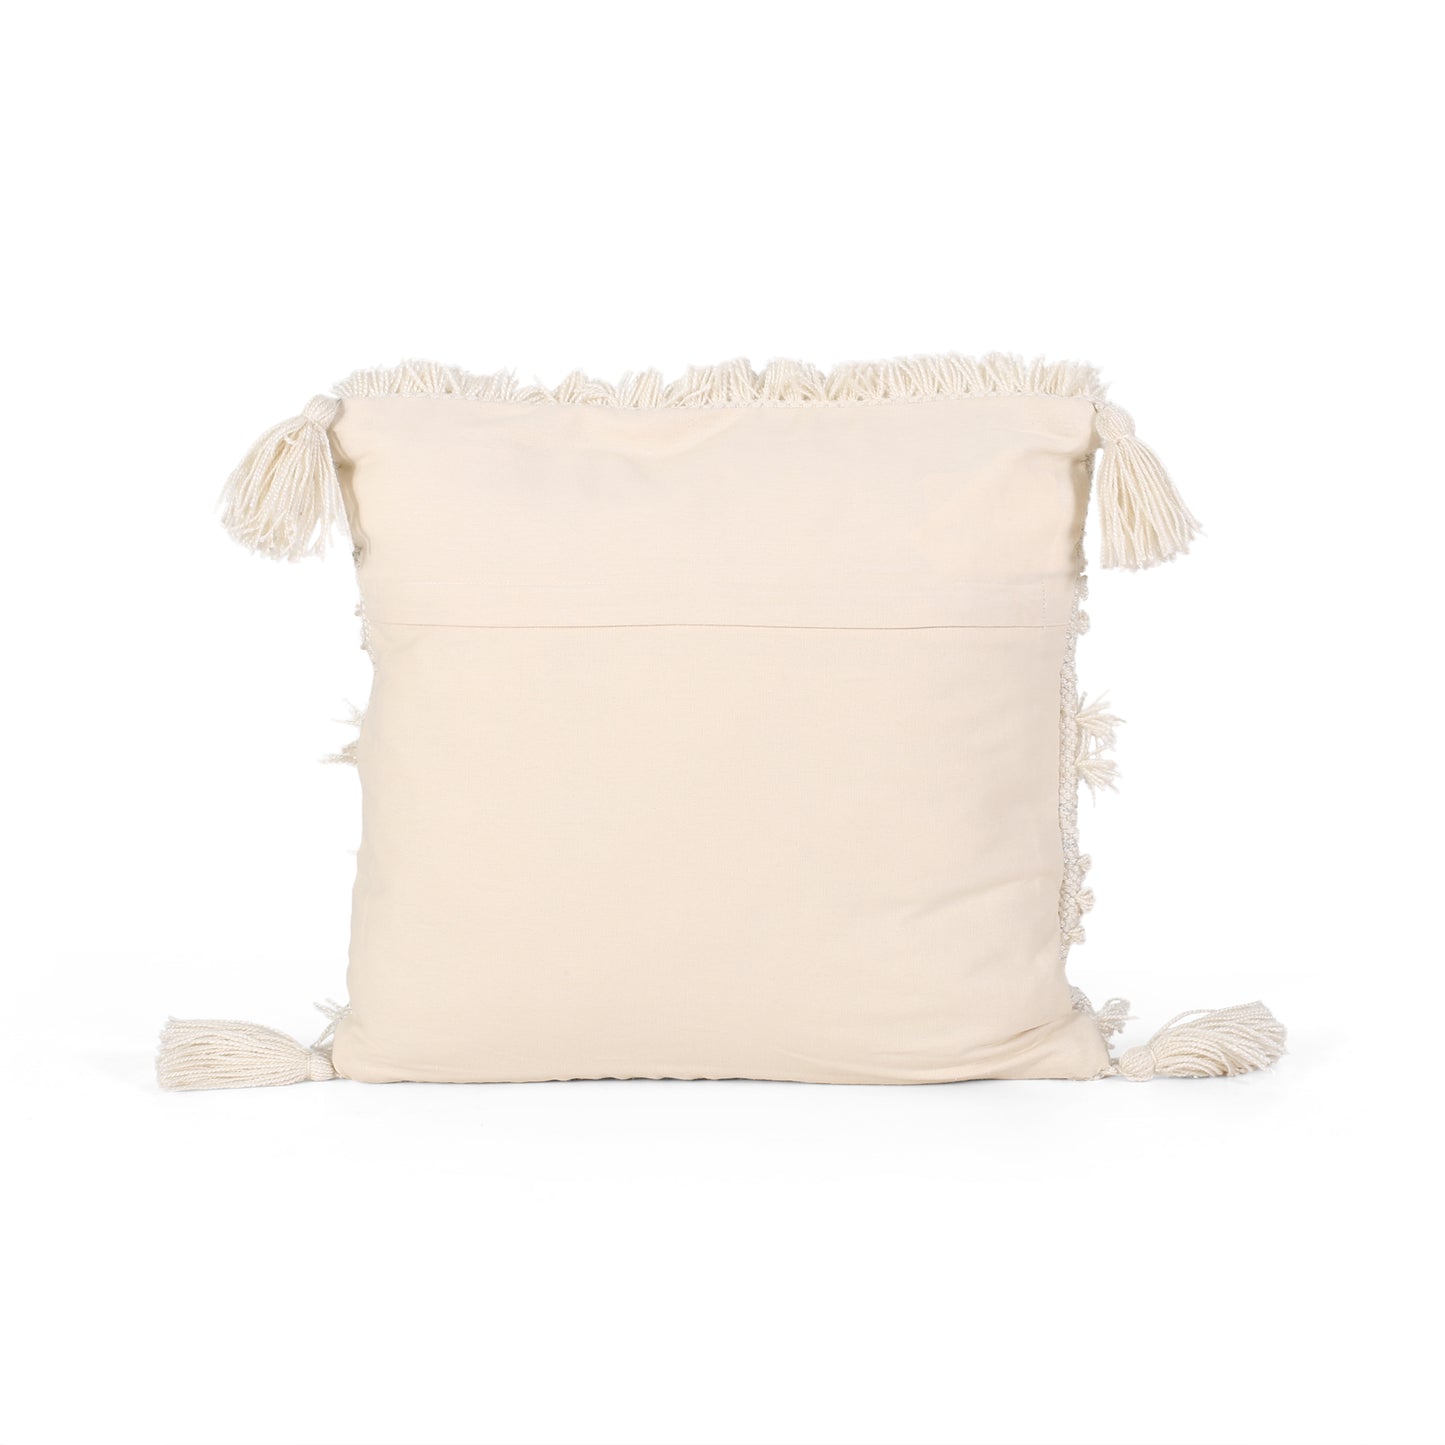 Linda Boho Yarn and Cotton Pillow Cover